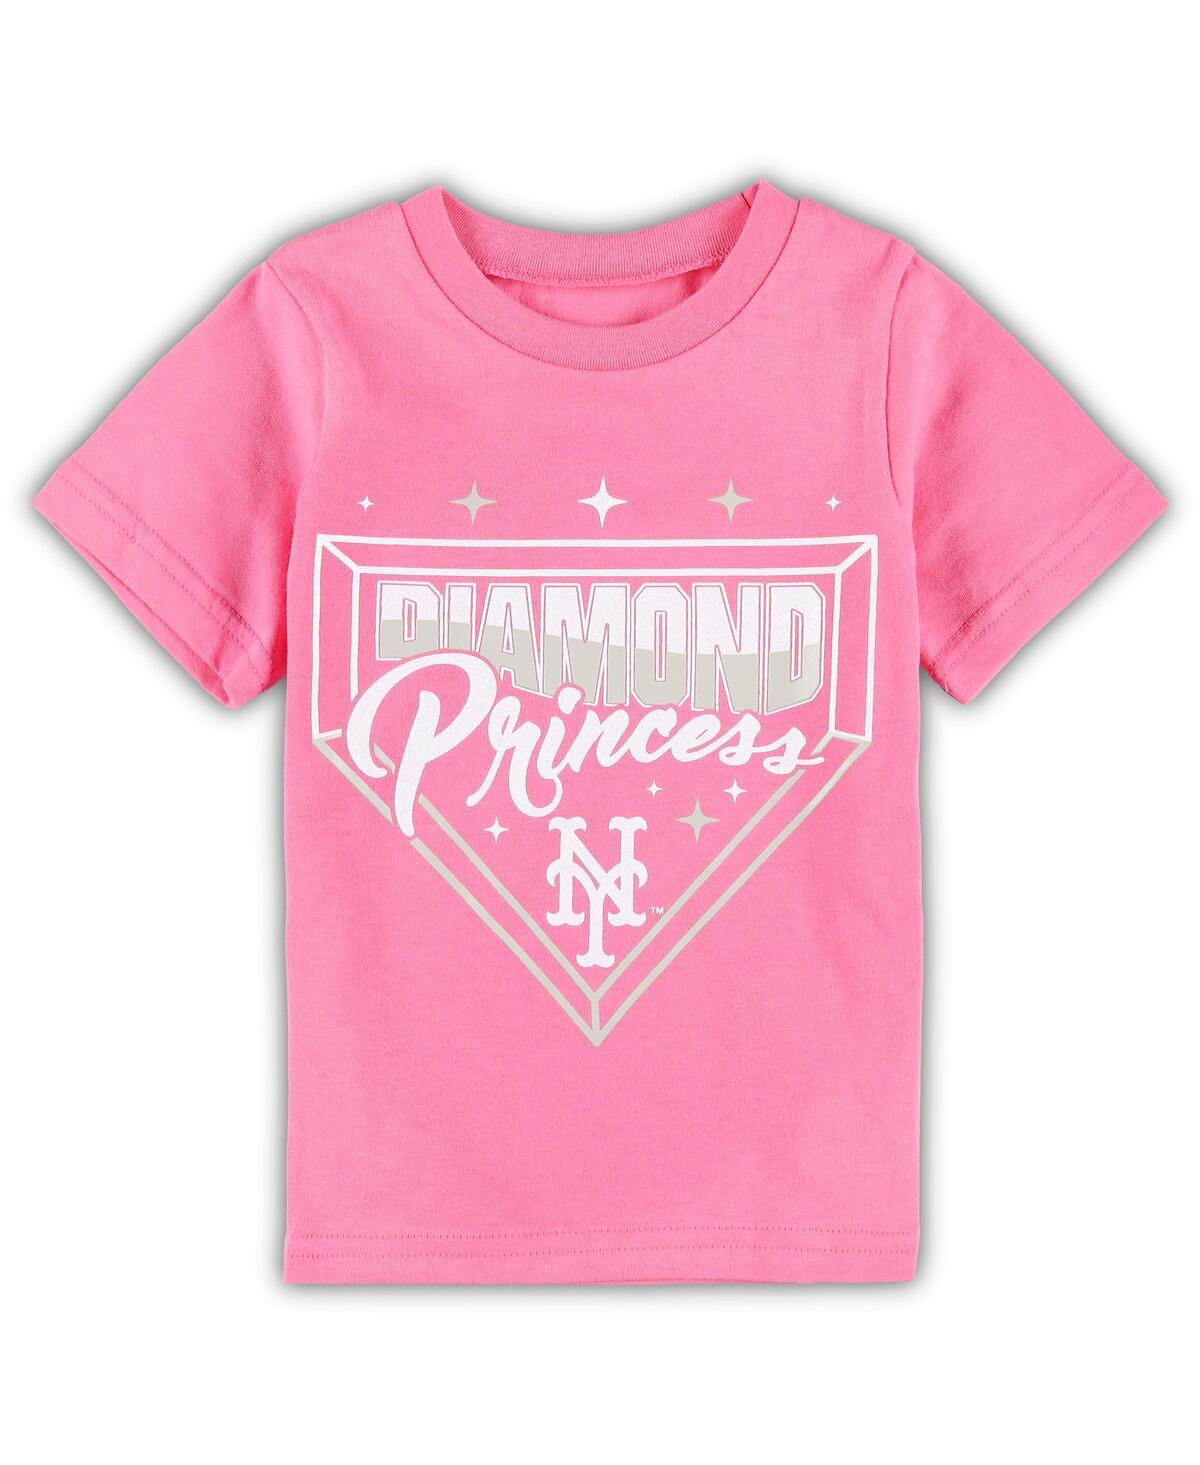 Outerstuff Babies' Girls Toddler Pink New York Mets Diamond Princess T-shirt